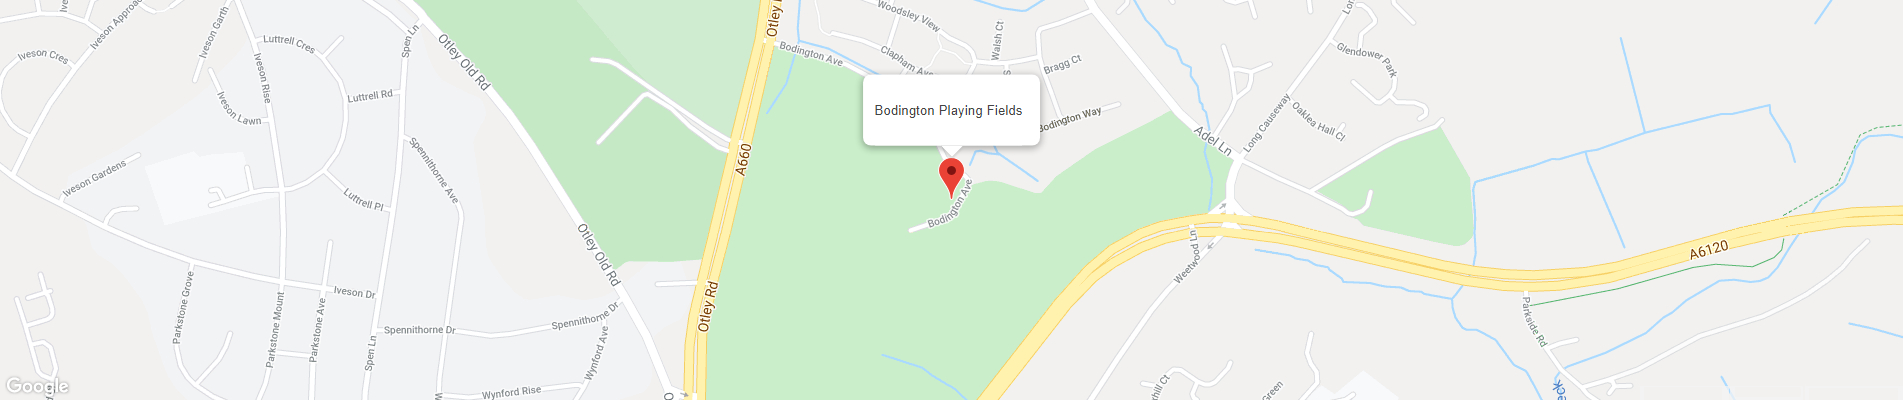 Bodington Playing Fields Google Map